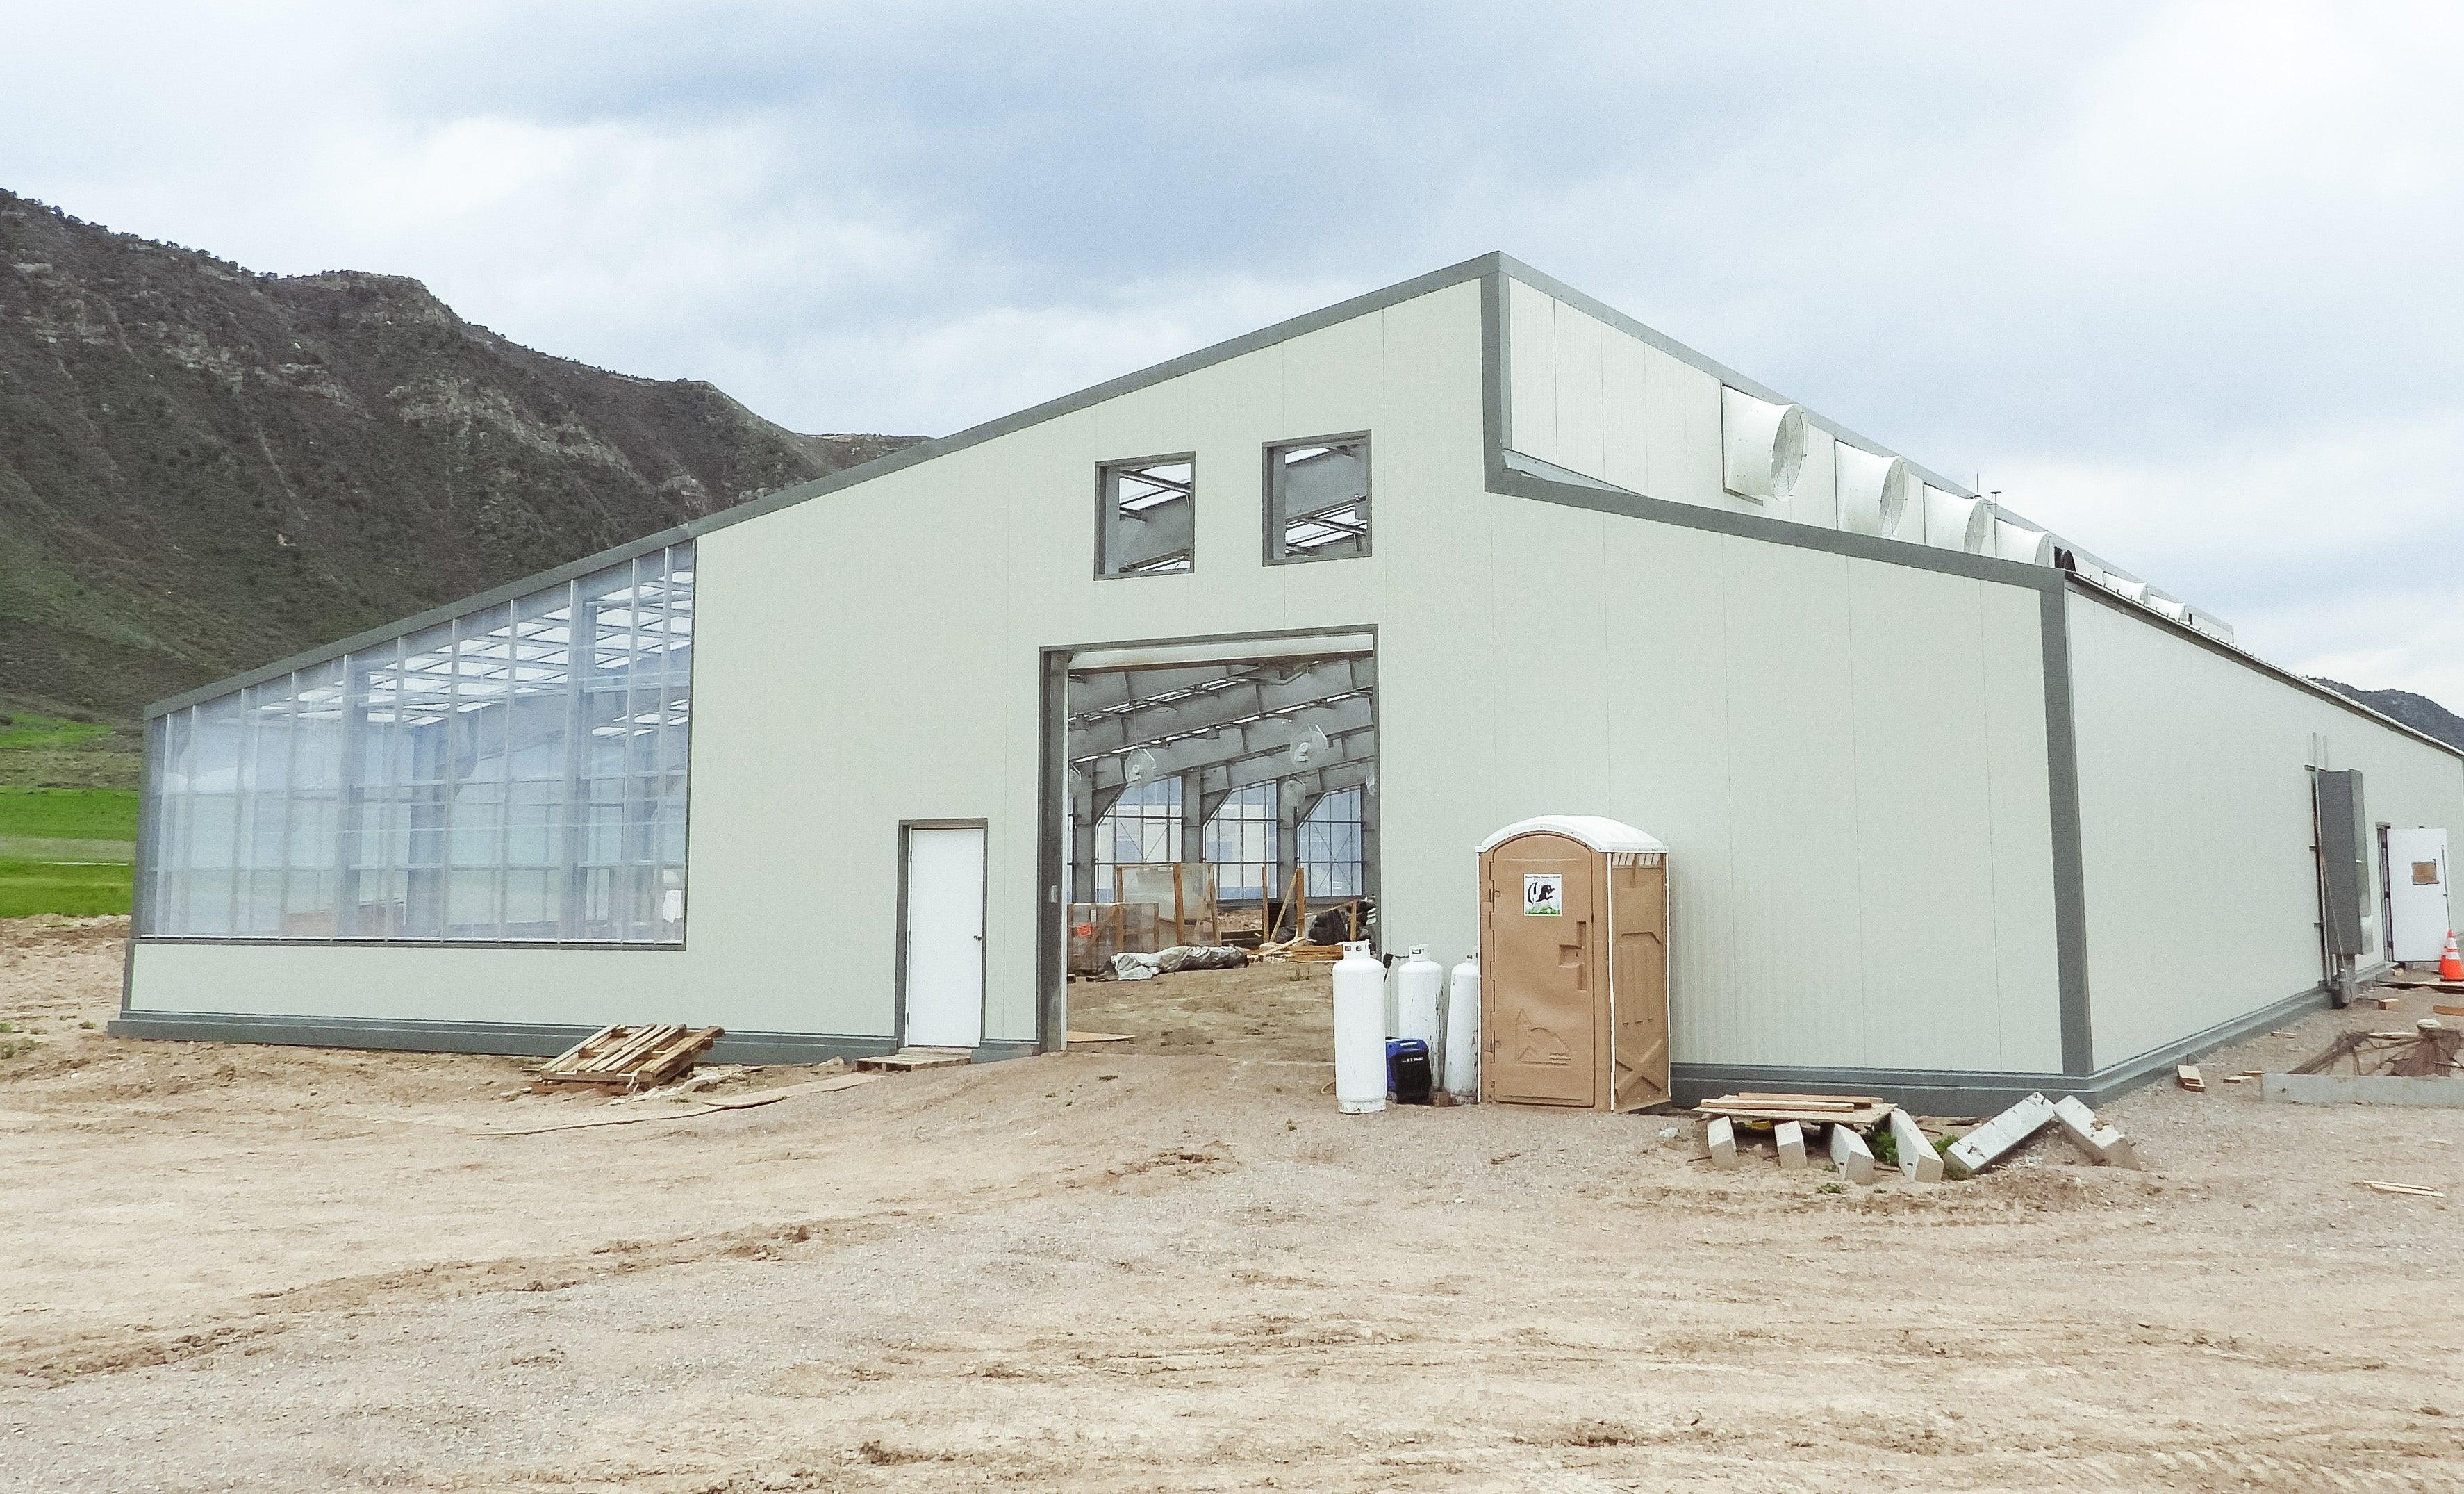 2022 July 09 Nutrient Farm unveils World’s first Triple-Layer ETFE Building - Nutrient Farm